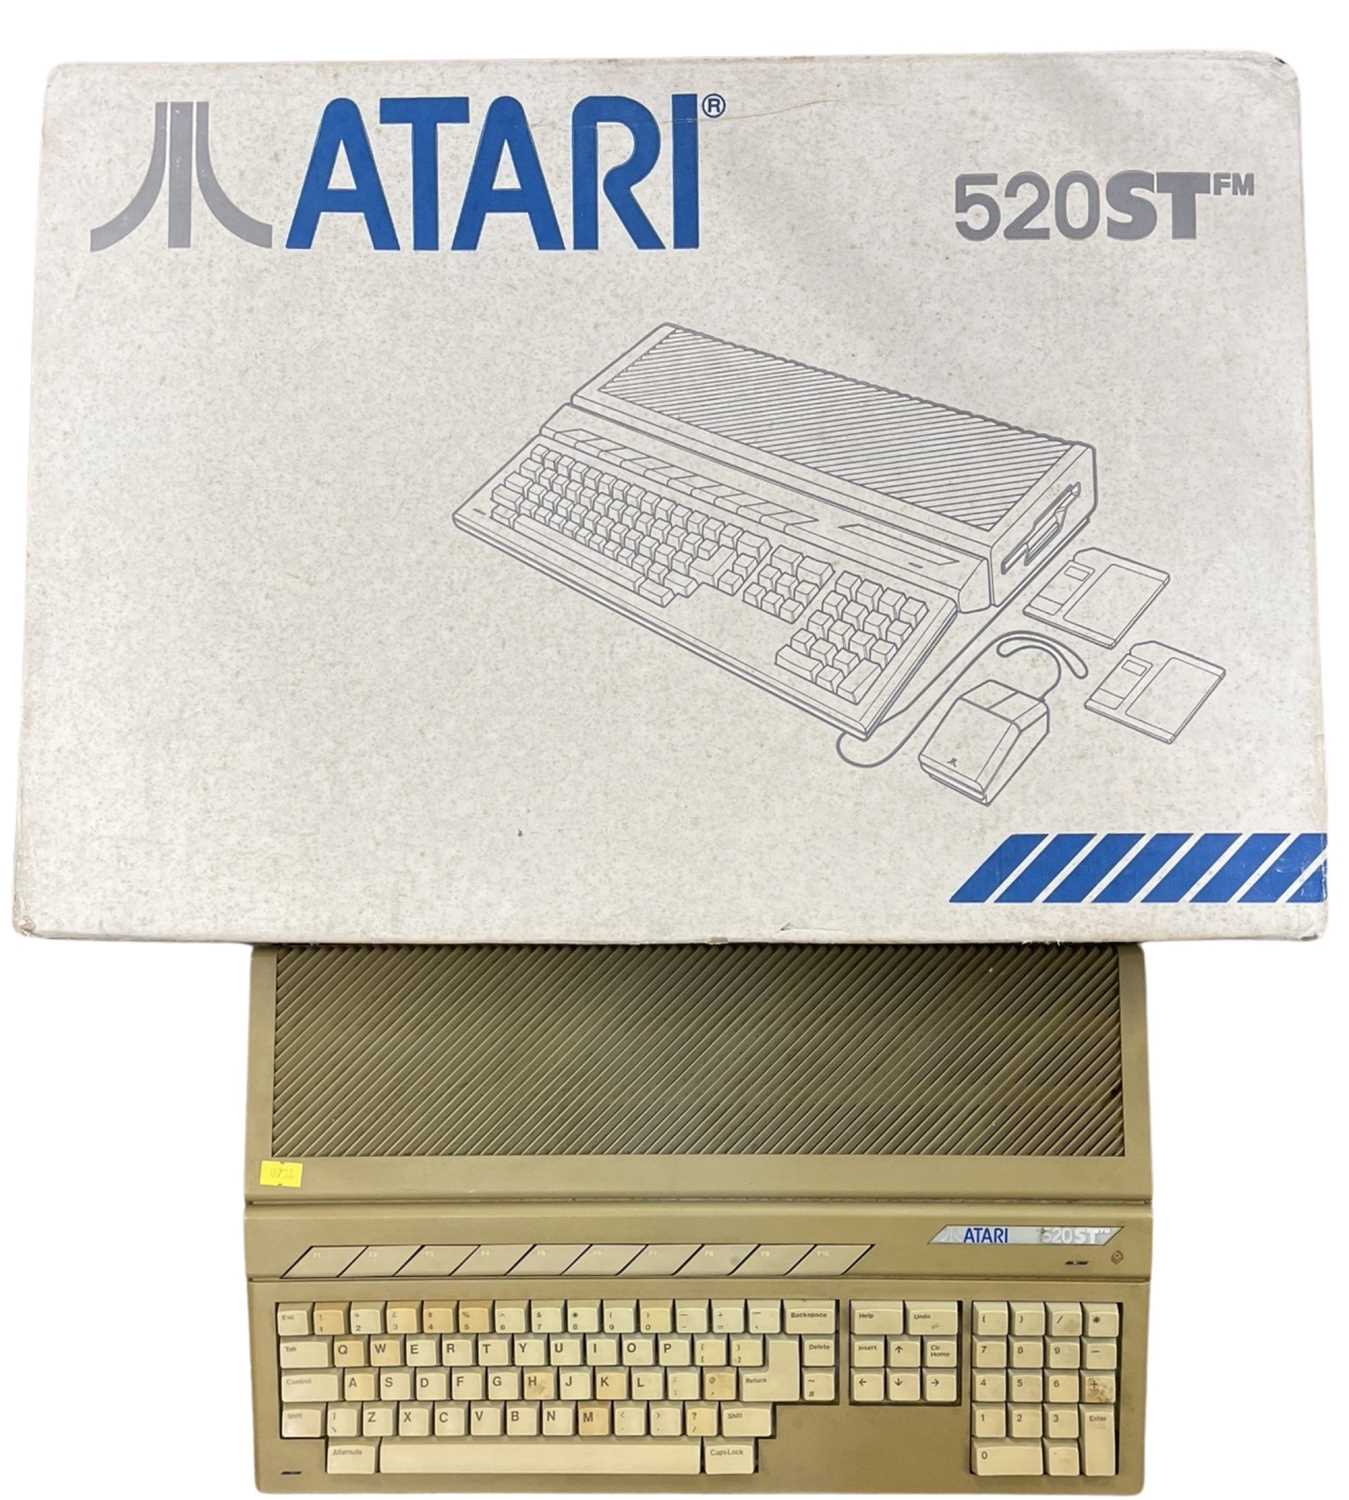 A boxed Atari 520ST console